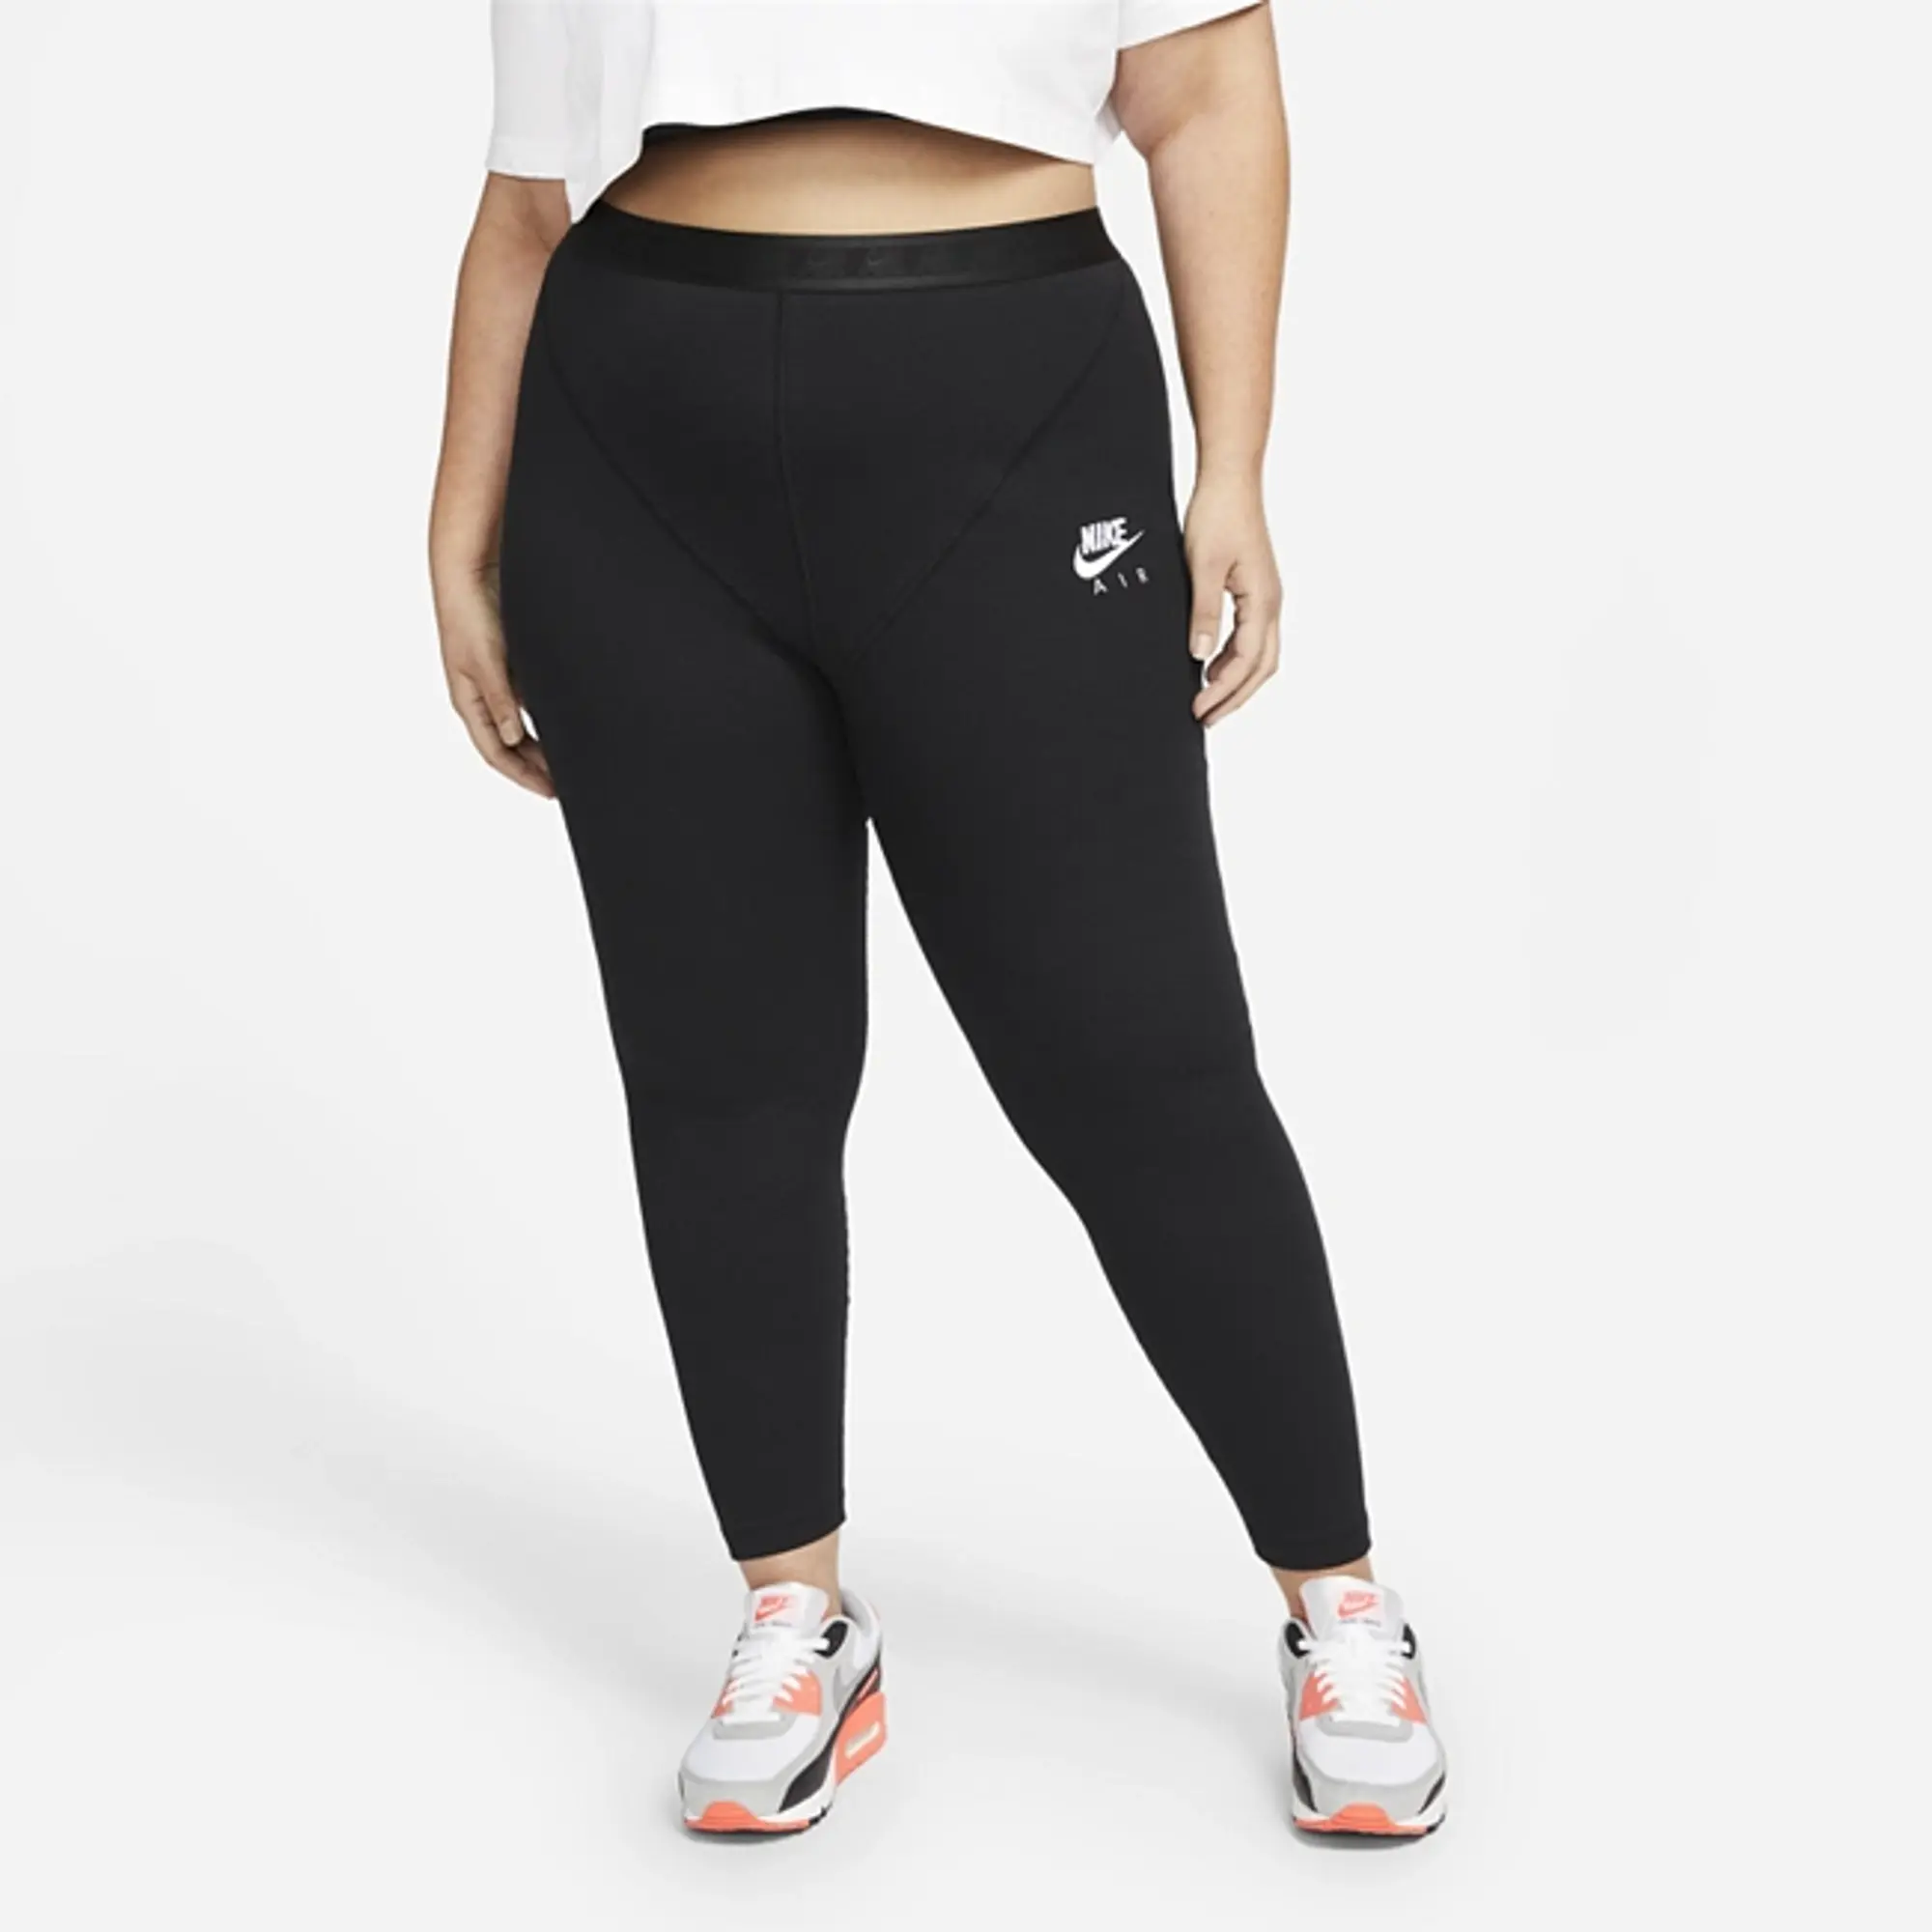 Nike Air ribbed leggings in black